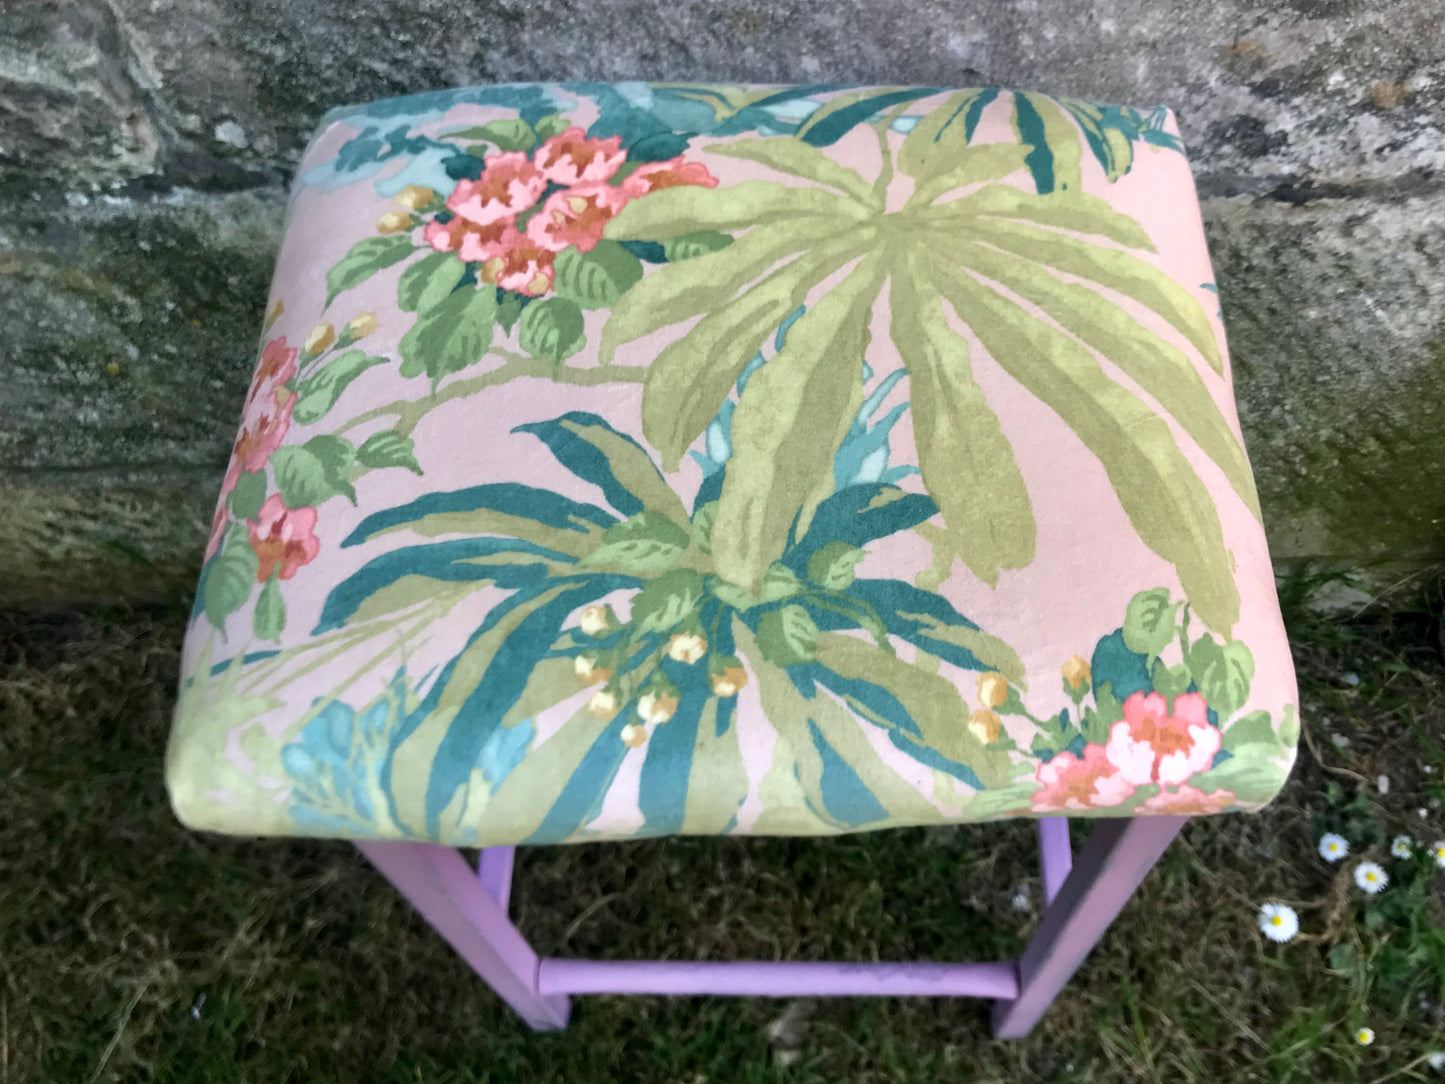 Vintage metal stool with tropical velvet seat pad